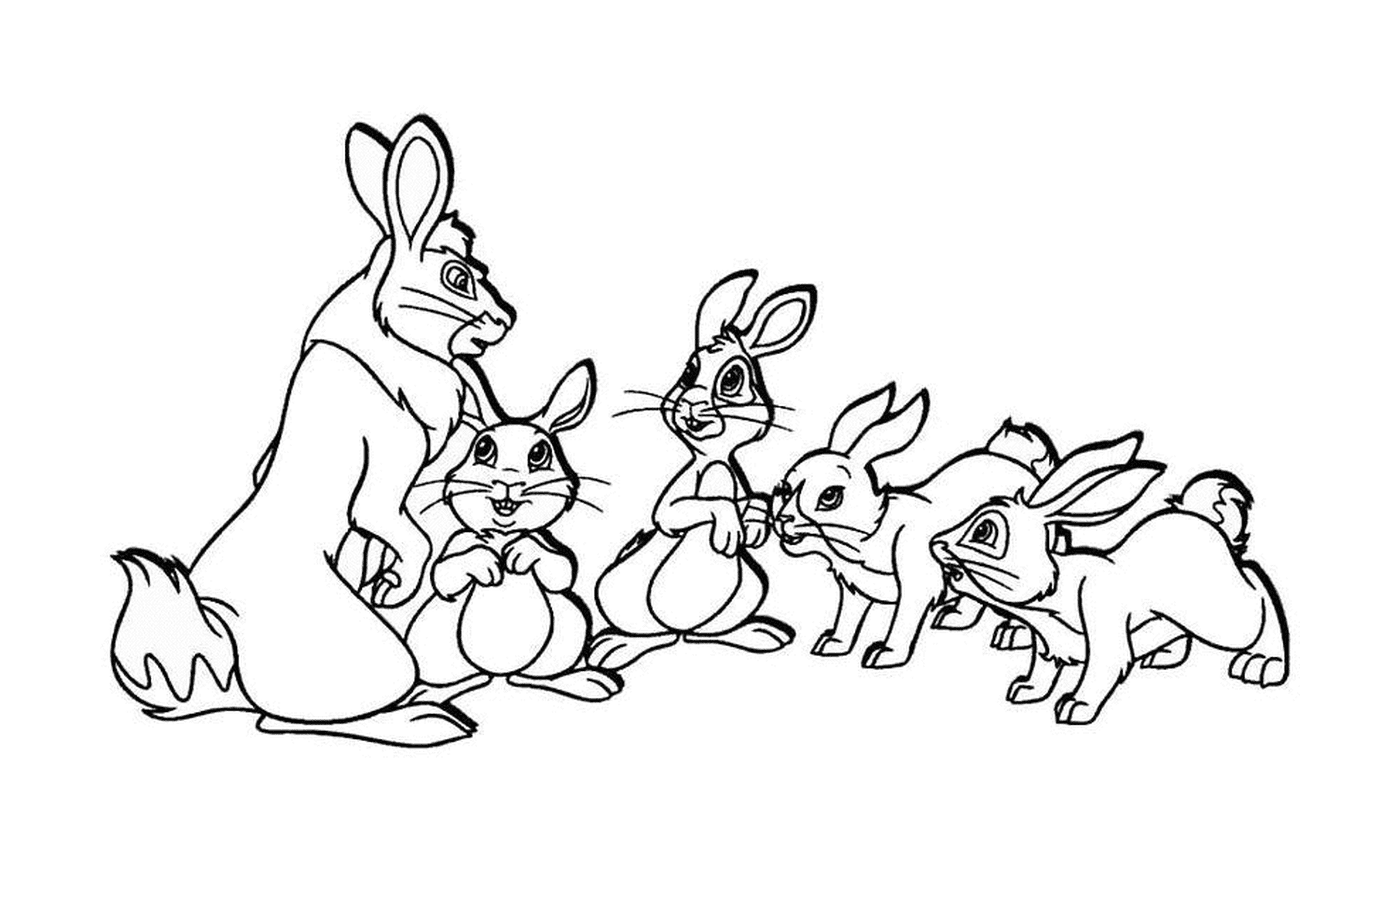  Group of small rabbits 